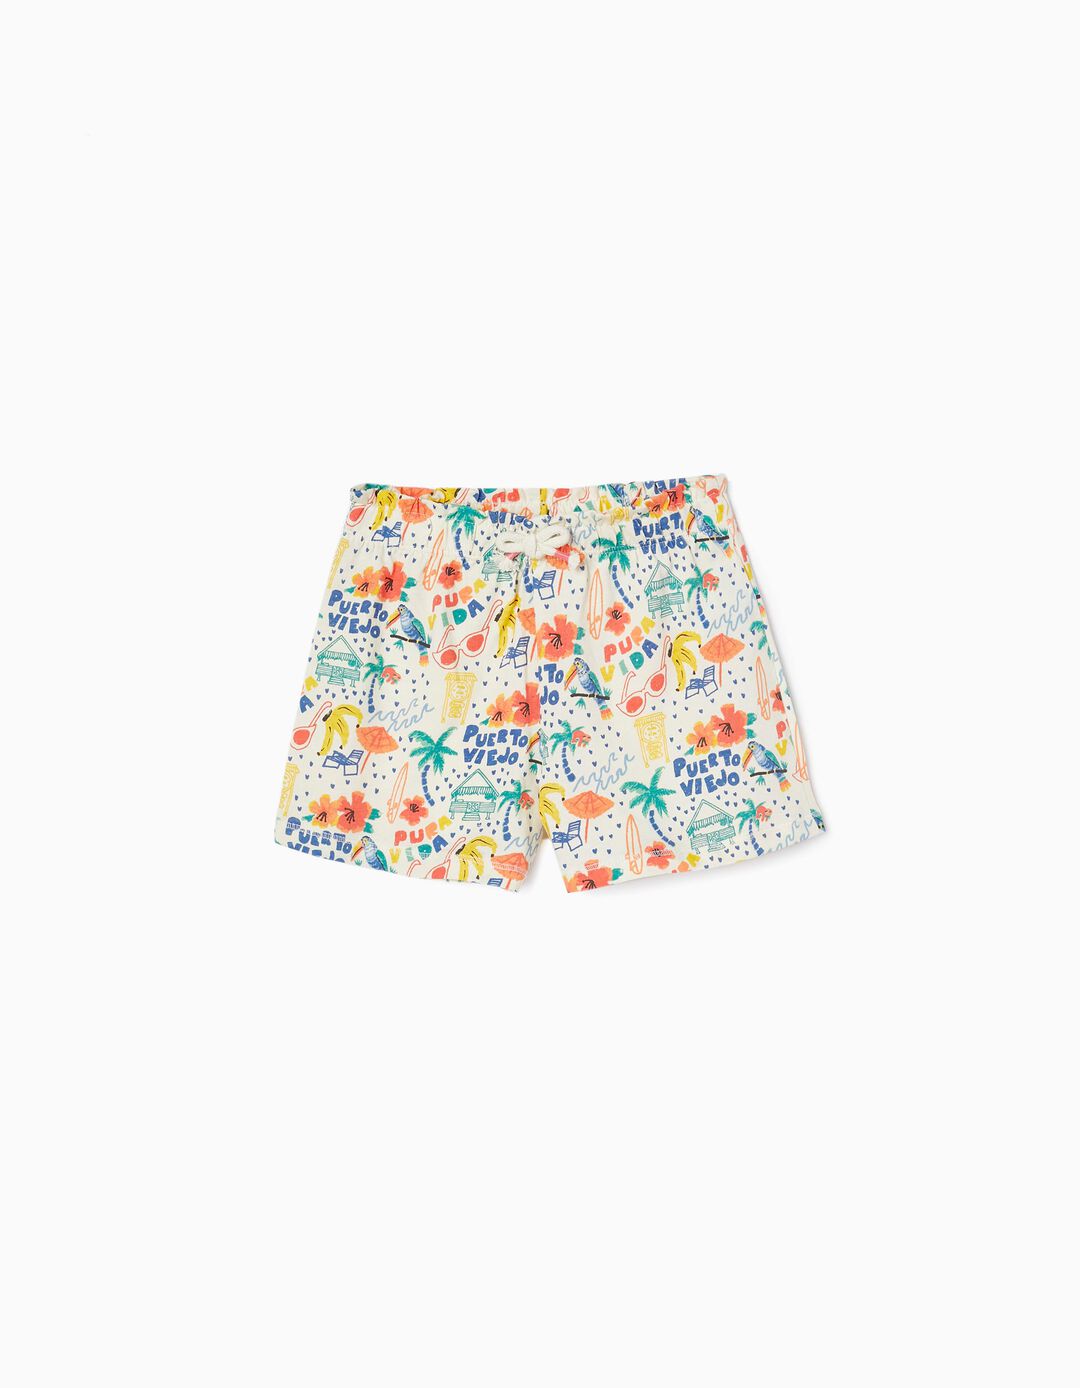 Cotton Shorts for Girls 'Pura Vida', Multicoloured